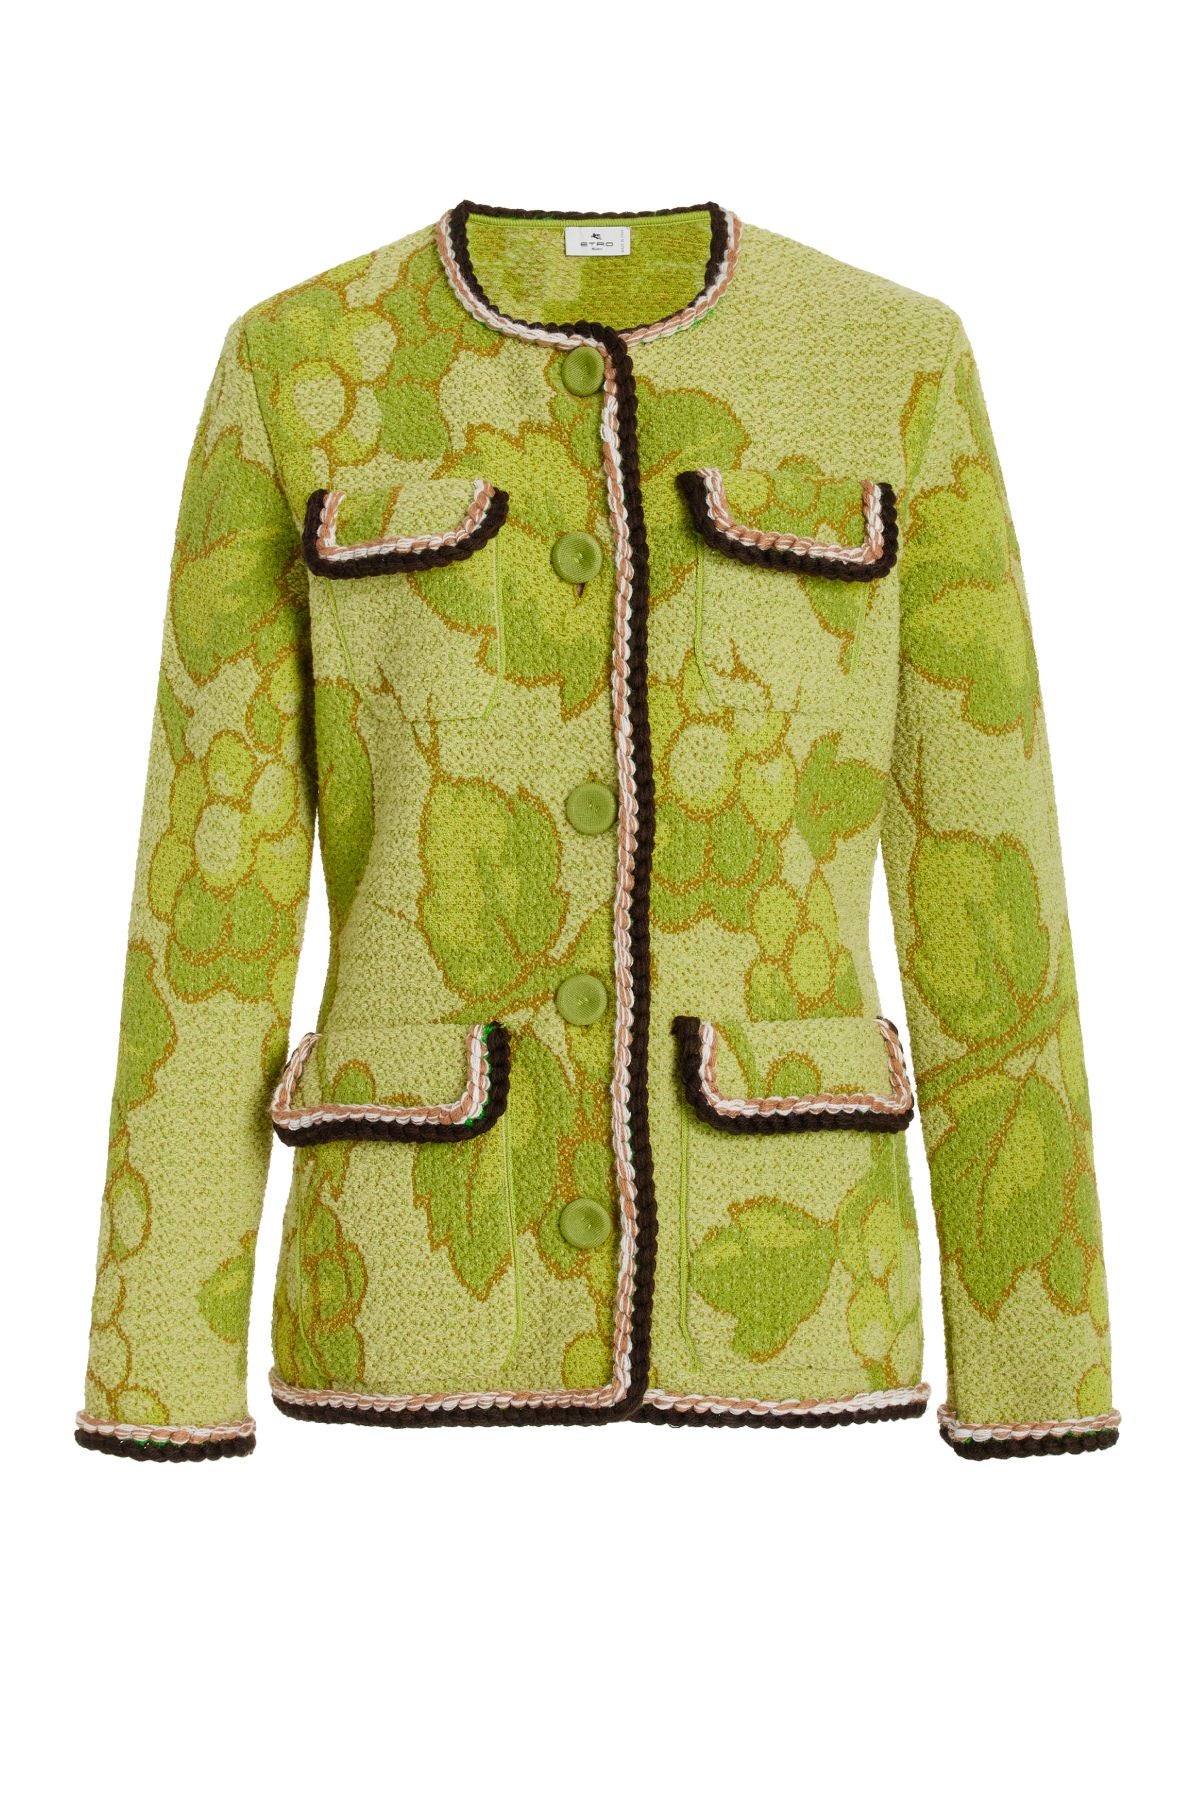 Etro Floral Knit Jacket - Green